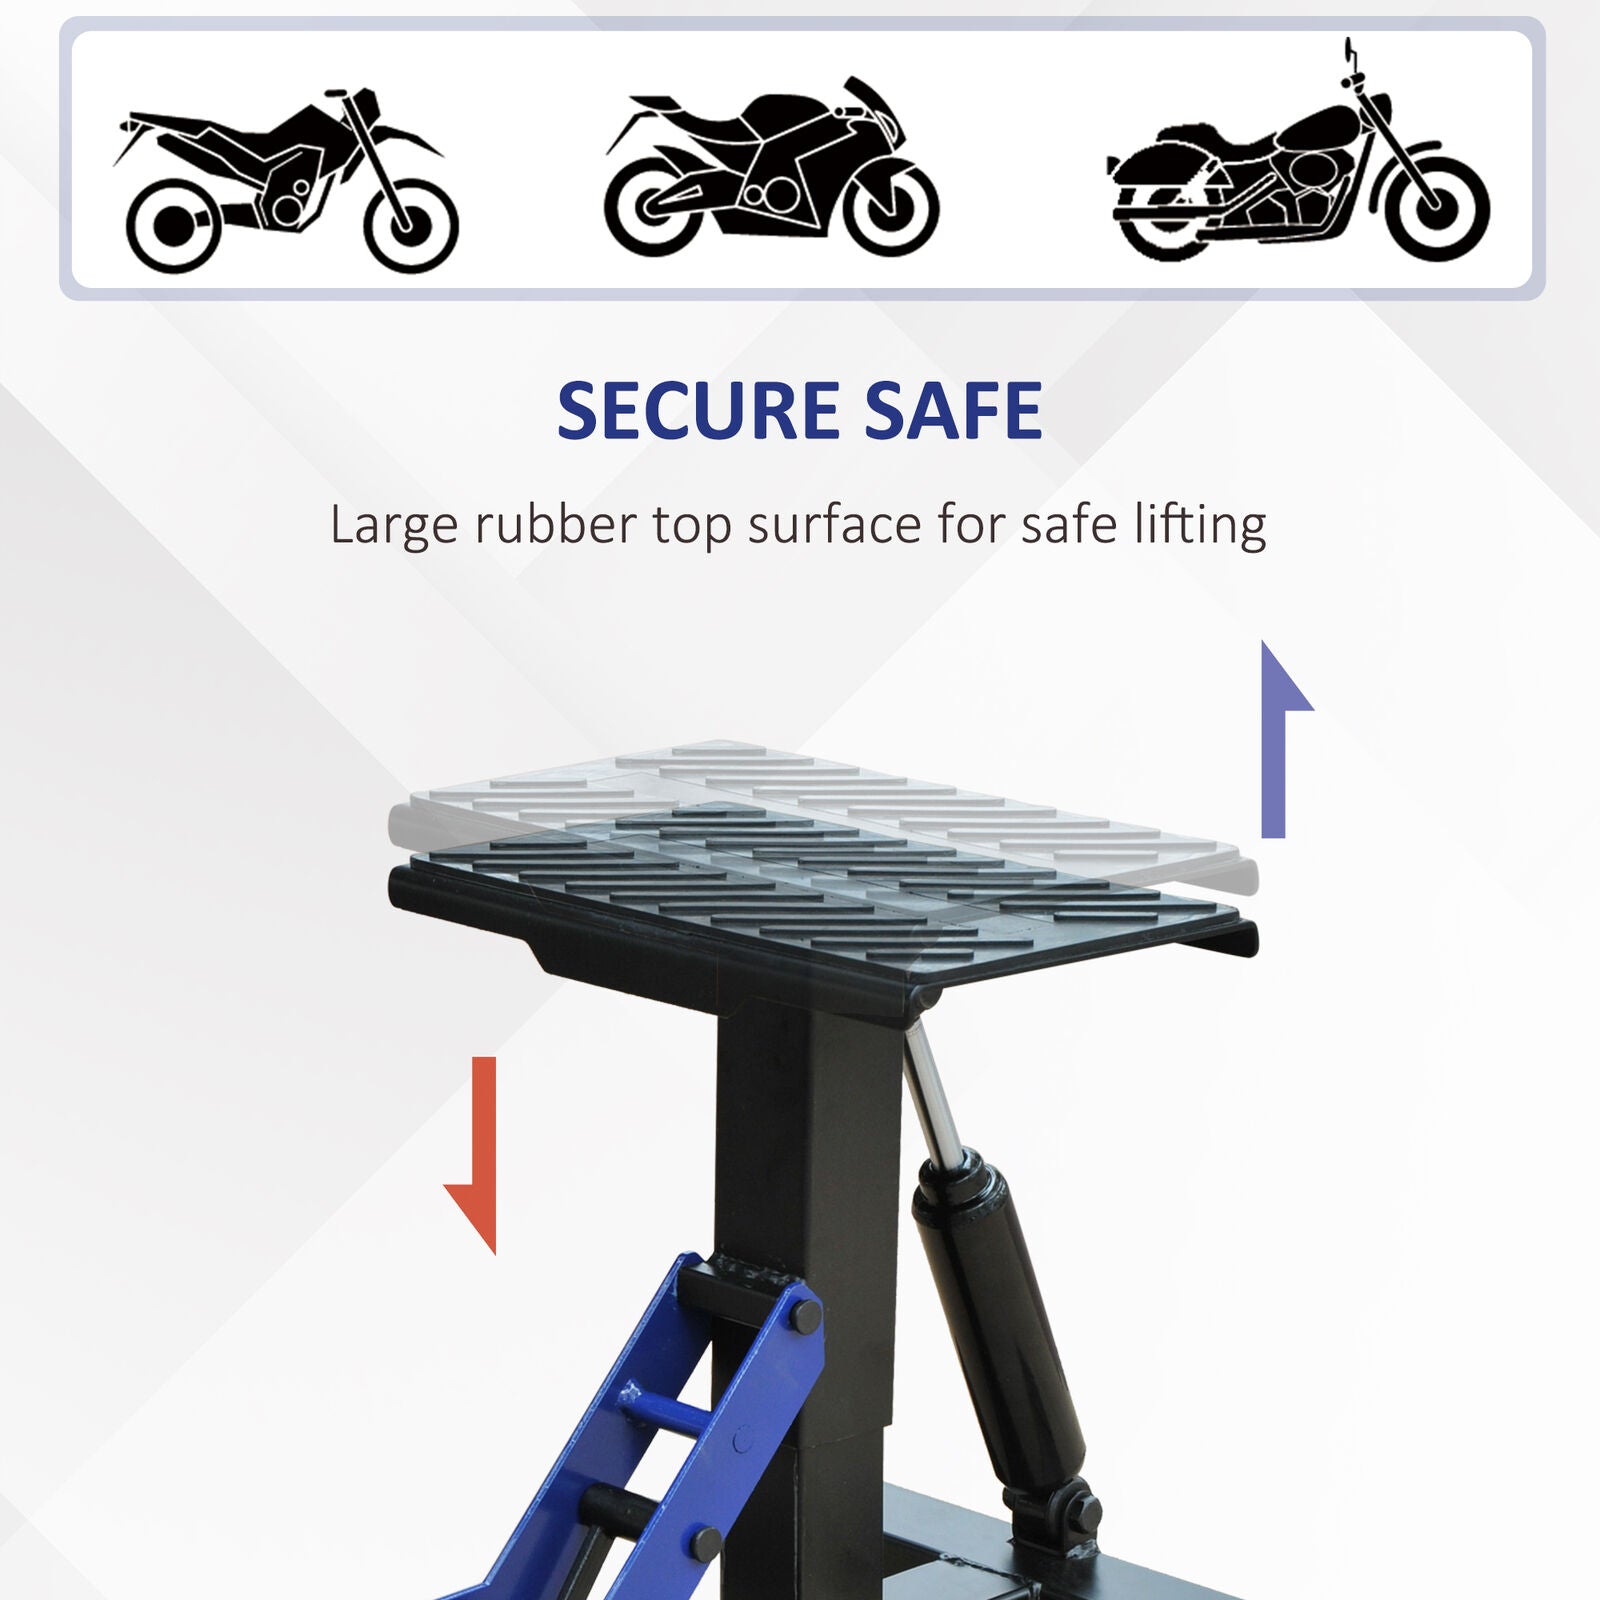 Steel Motorcycle Jack - Adjustable Motorcycle Stand